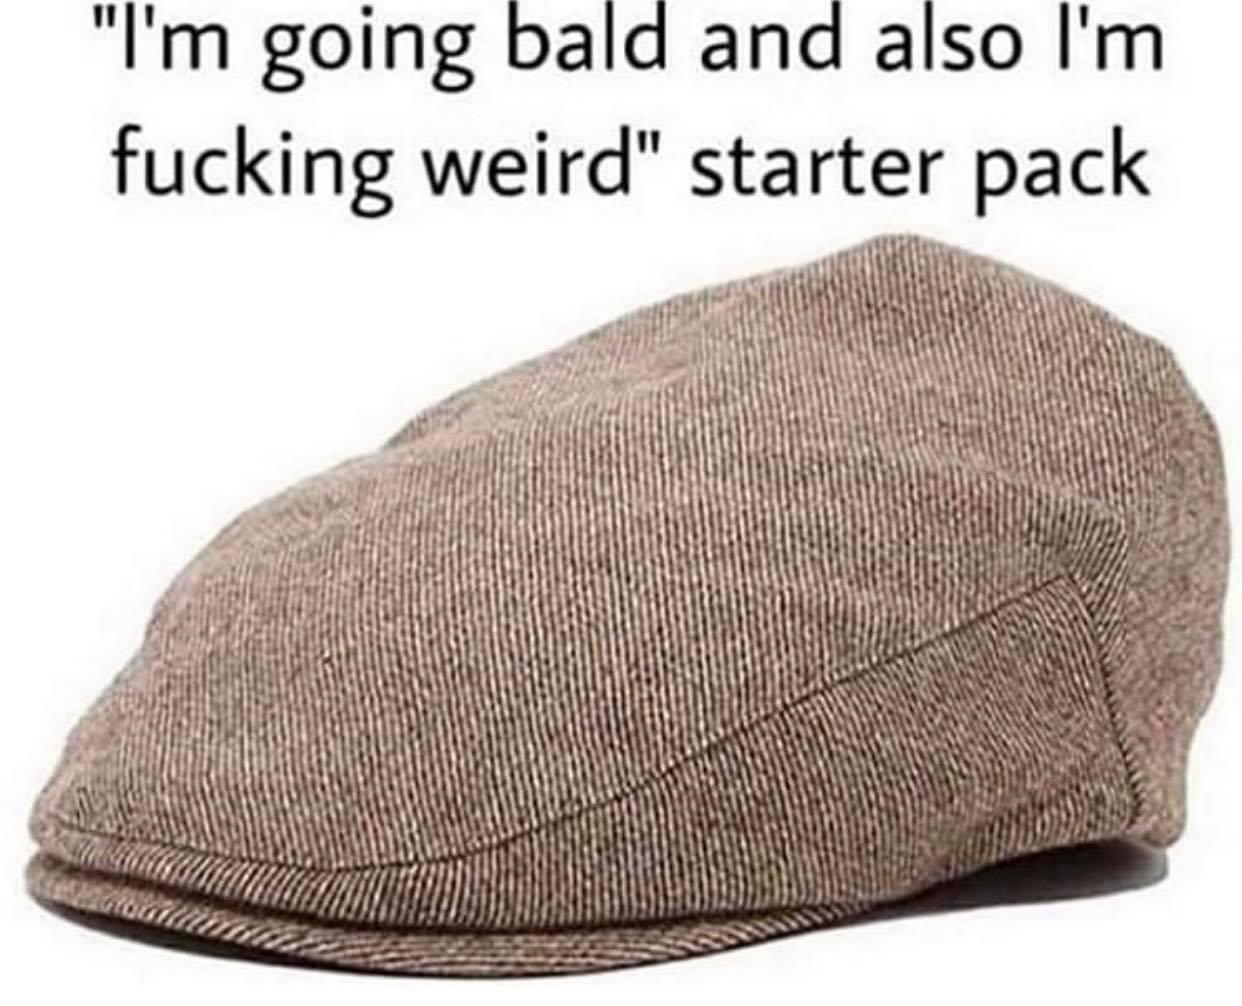 im going bald starter pack - "I'm going bald and also I'm fucking weird" starter pack